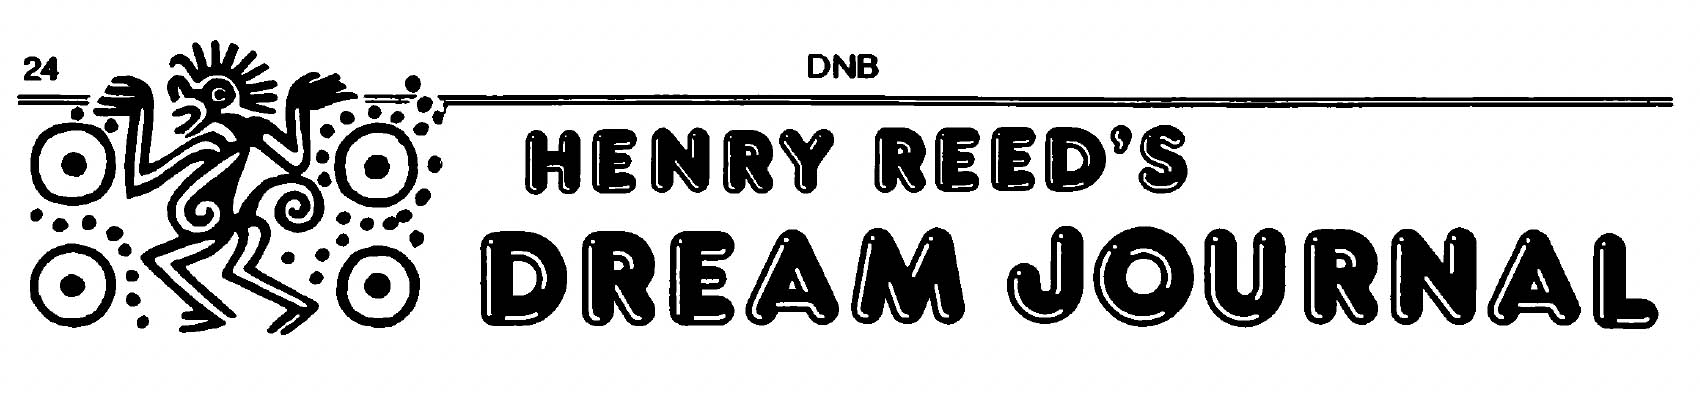 Henry Reed's Dream Journal